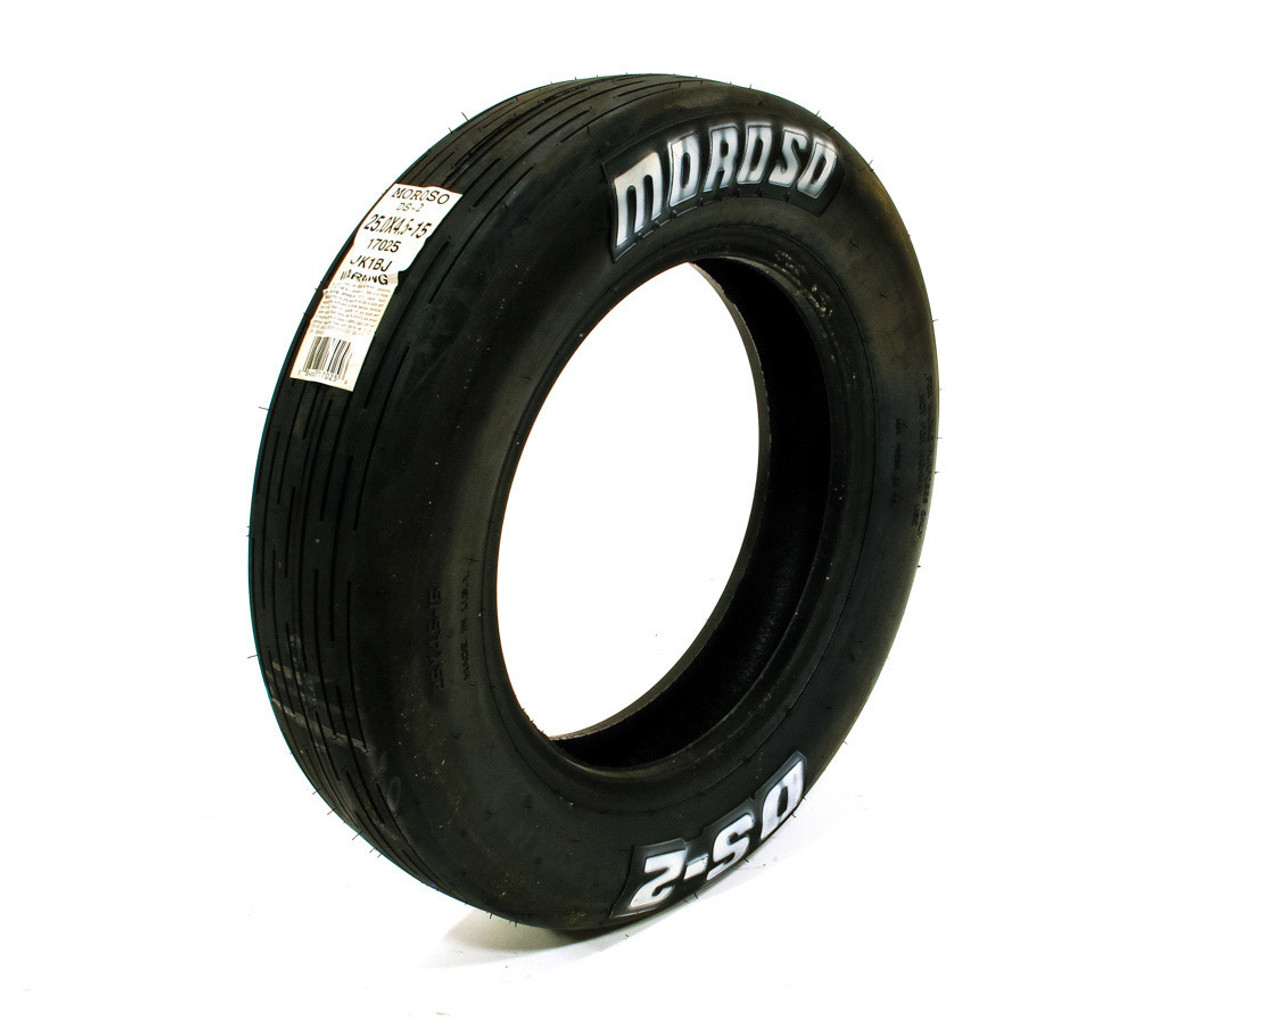 25.0/4.5-15 DS-2 Front Drag Tire MOR17025